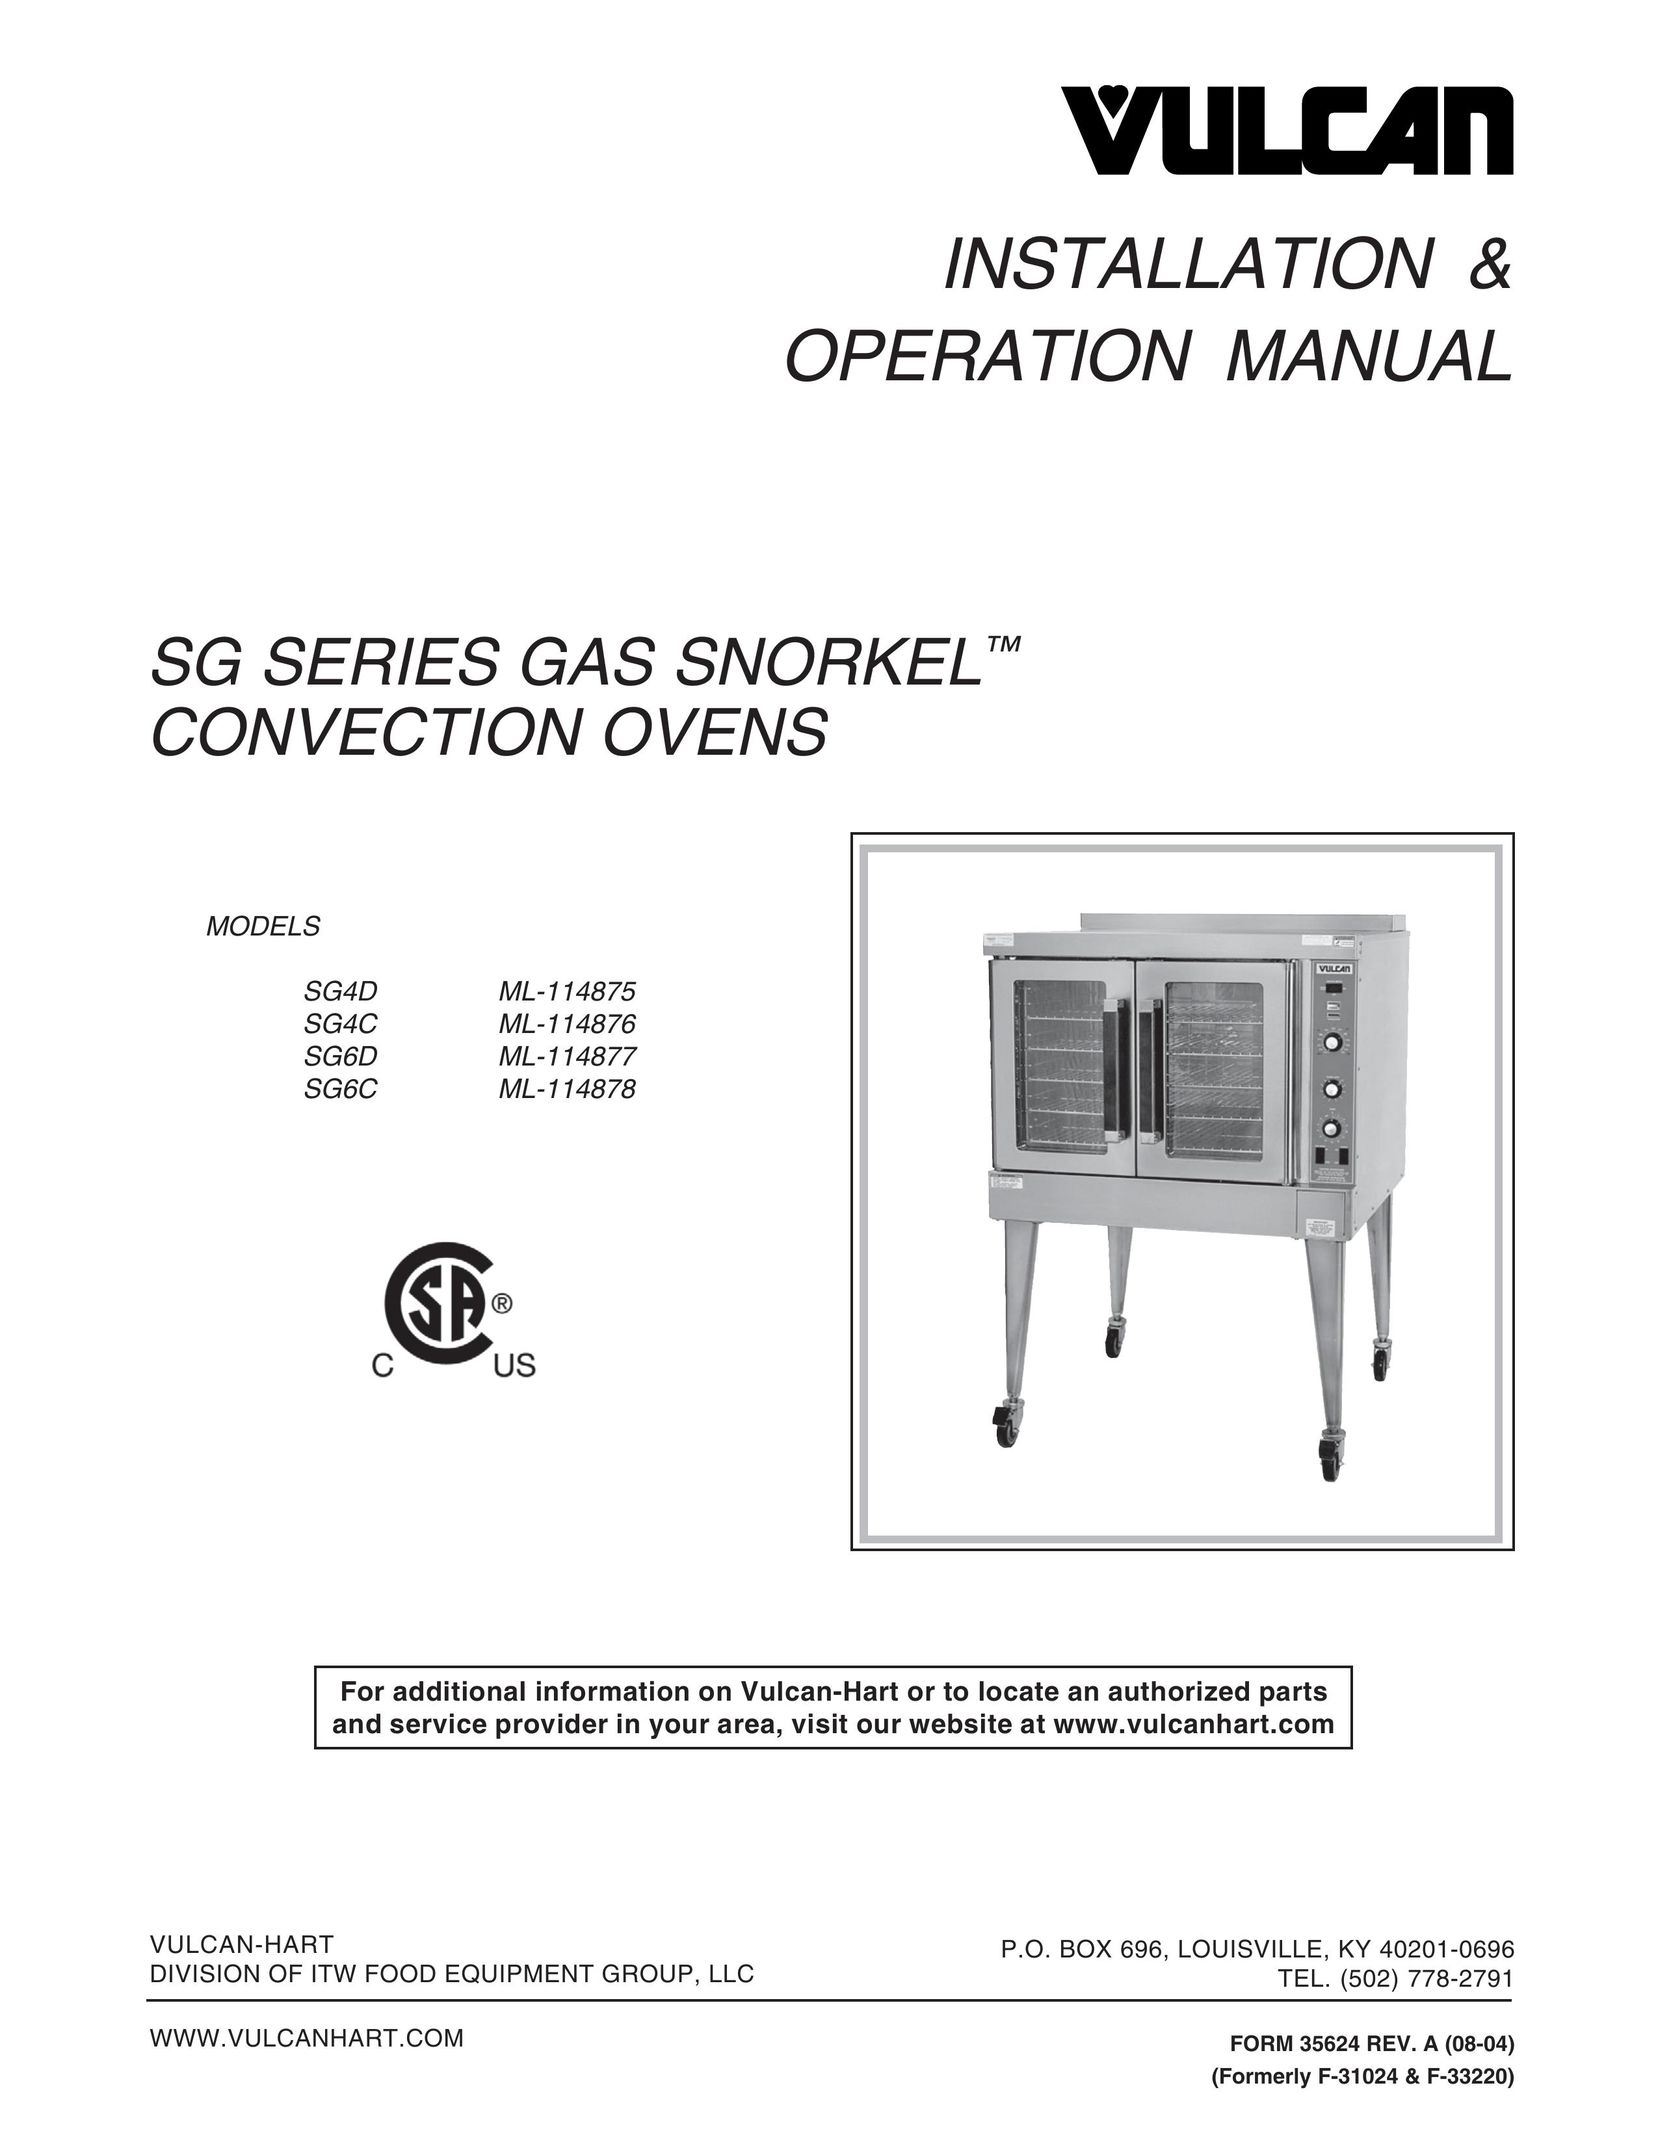 Vulcan-Hart SG4C ML-114876 Convection Oven User Manual